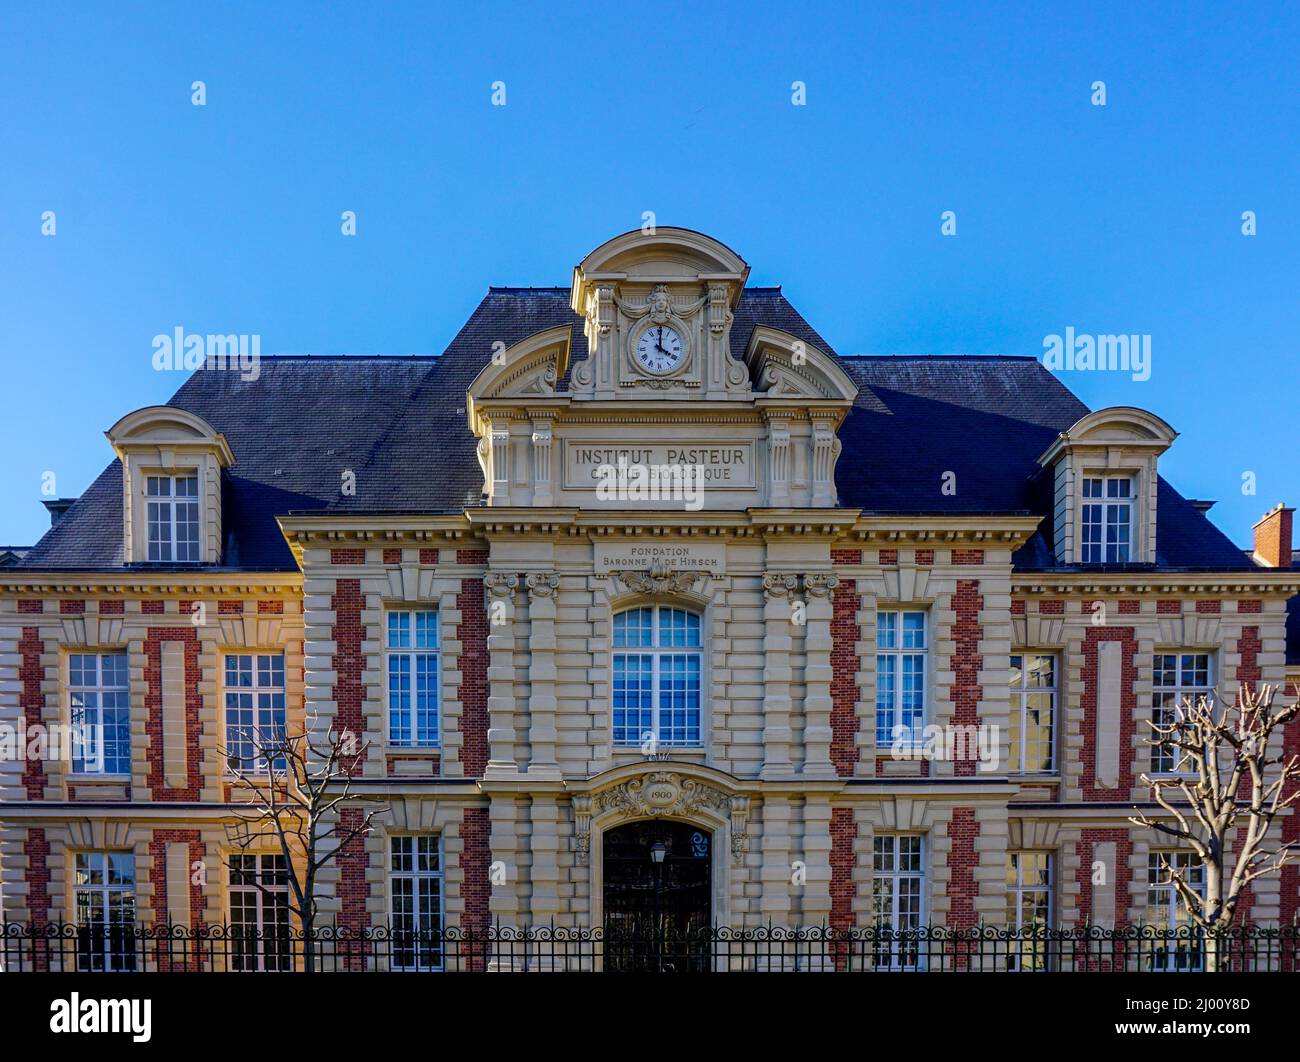 L'Istituto Pasteur di Parigi (Francia) Foto Stock